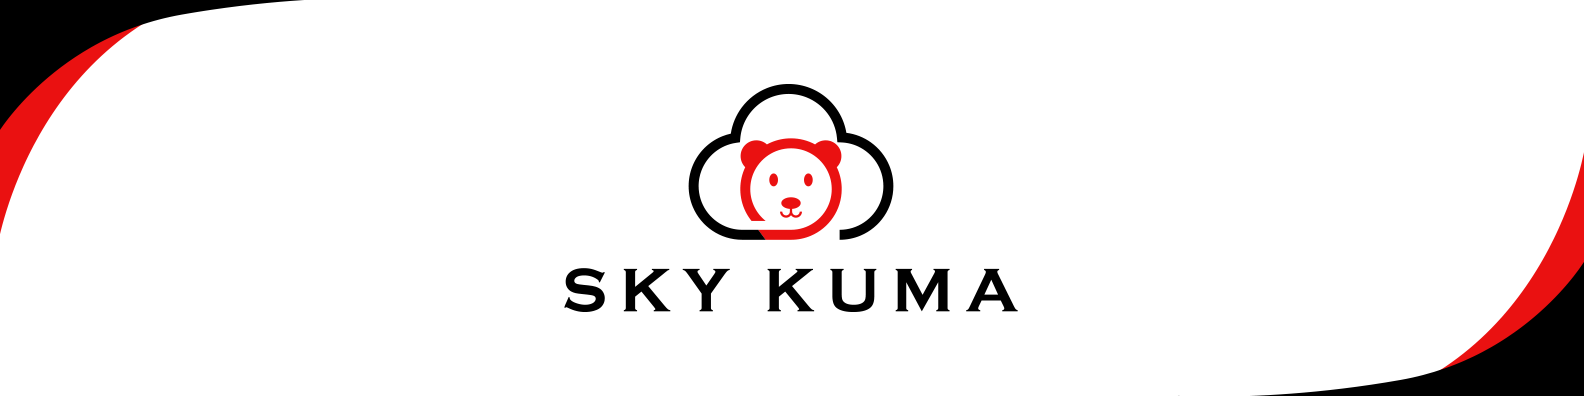 Sky Kuma / startup from Ramstein-Miesenbach / Background